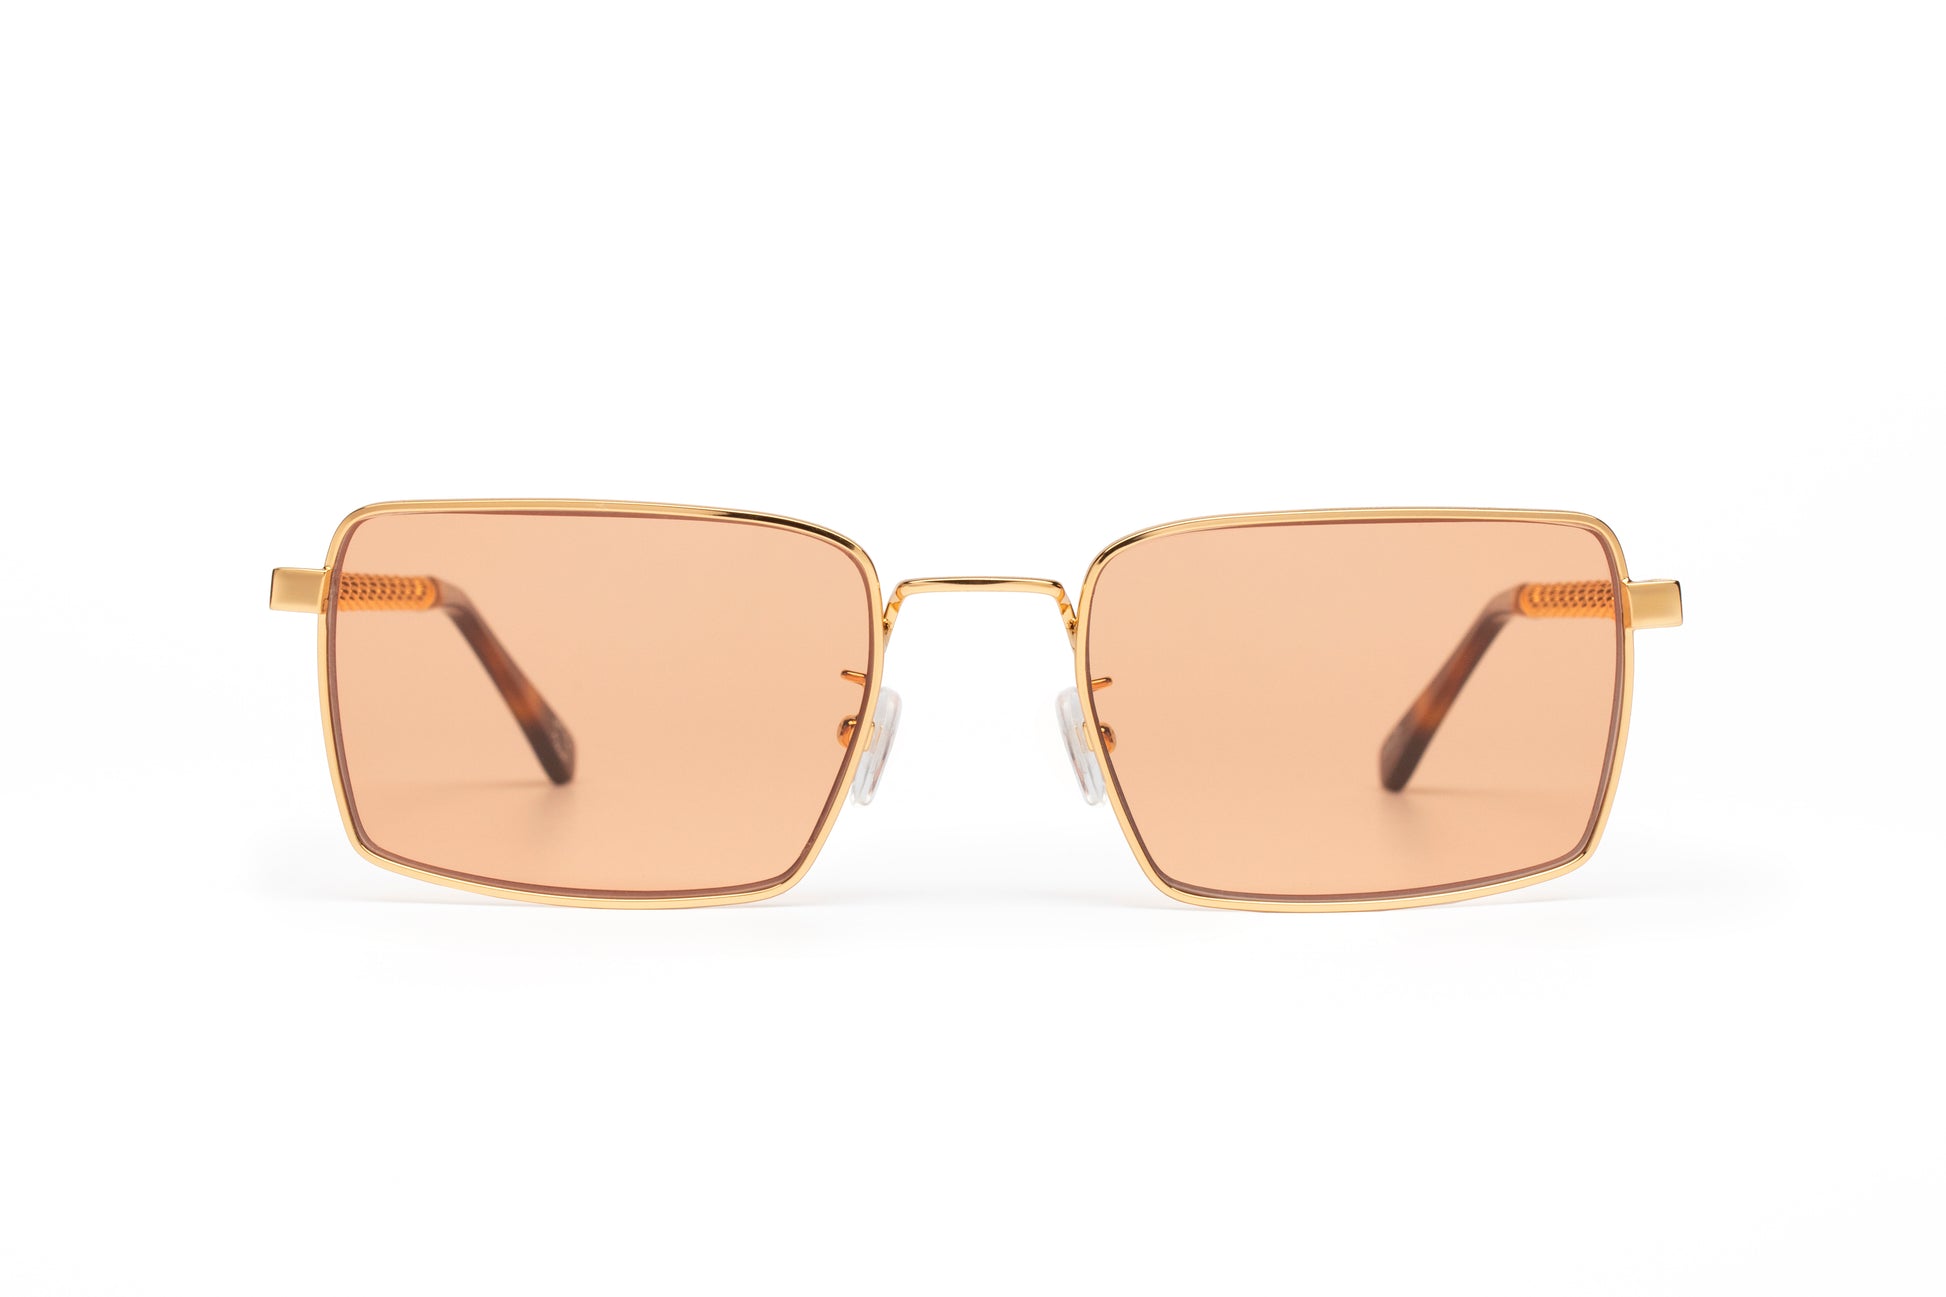 Chanel - Pilot Eyeglasses - Transparent Brown - Chanel Eyewear - Avvenice